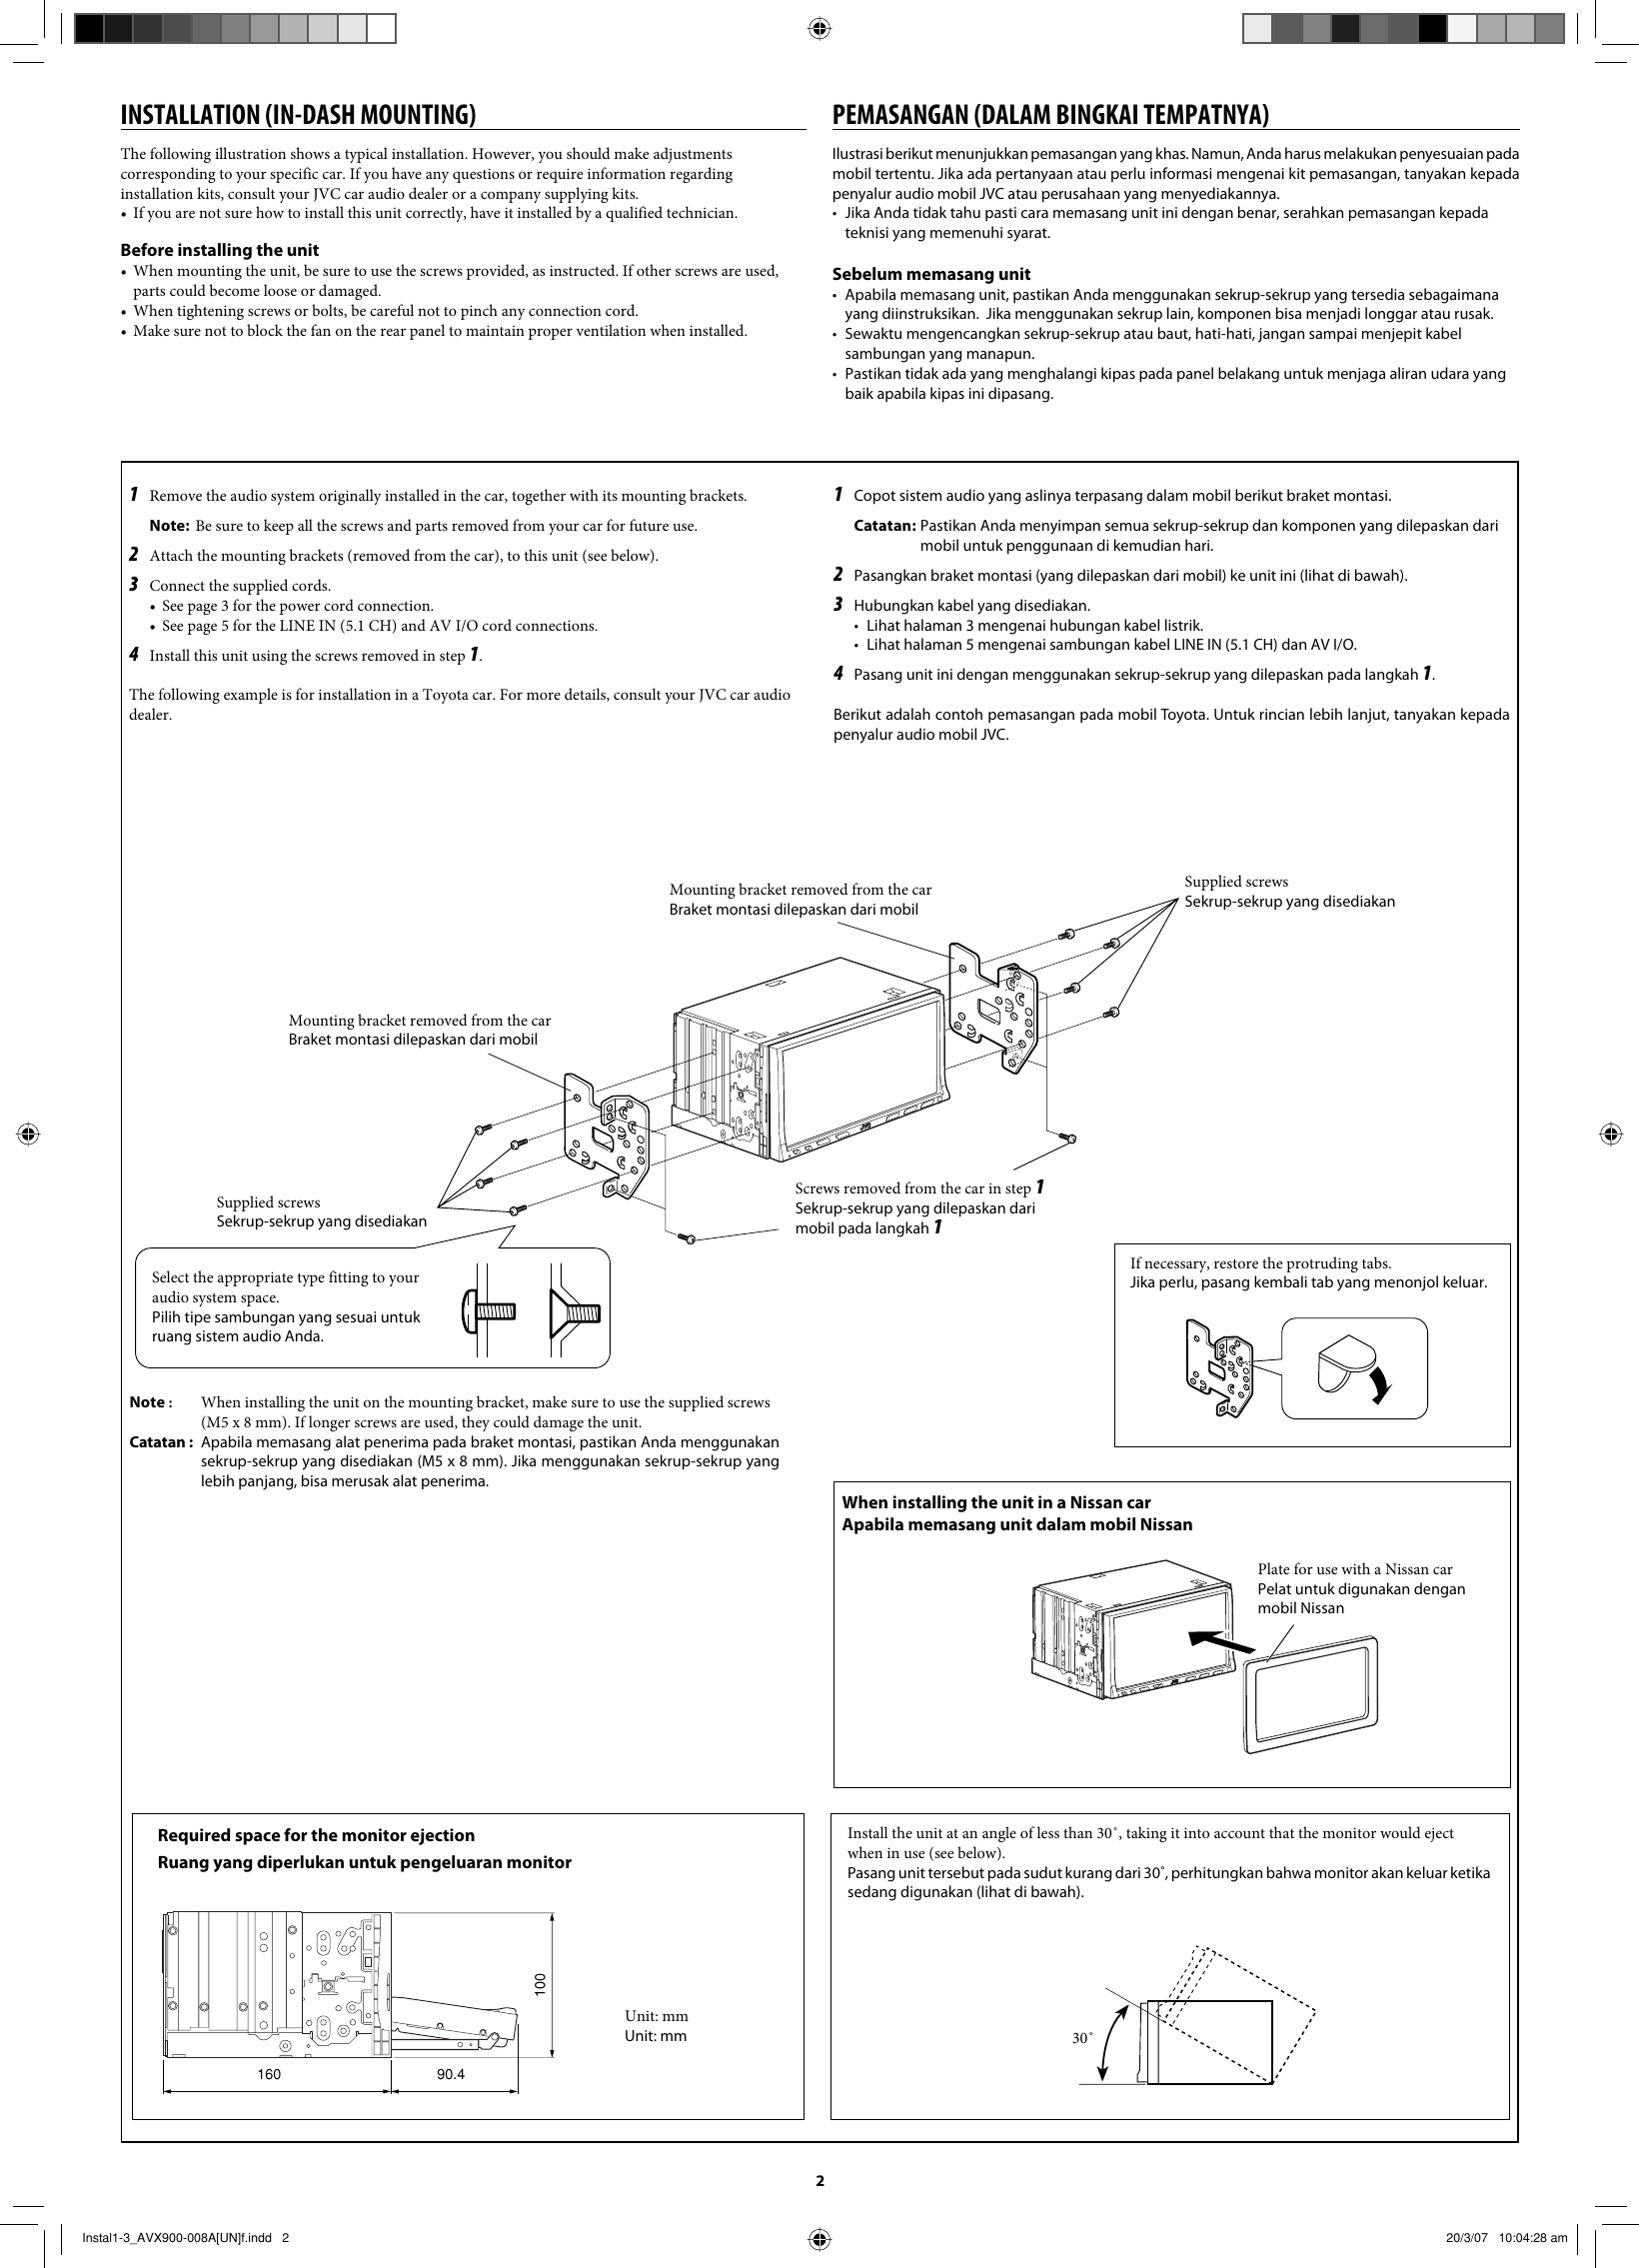 Page 2 of 6 - JVC KW-AVX900UN KW-AVX900[UN] Installation User Manual LVT1670-008A